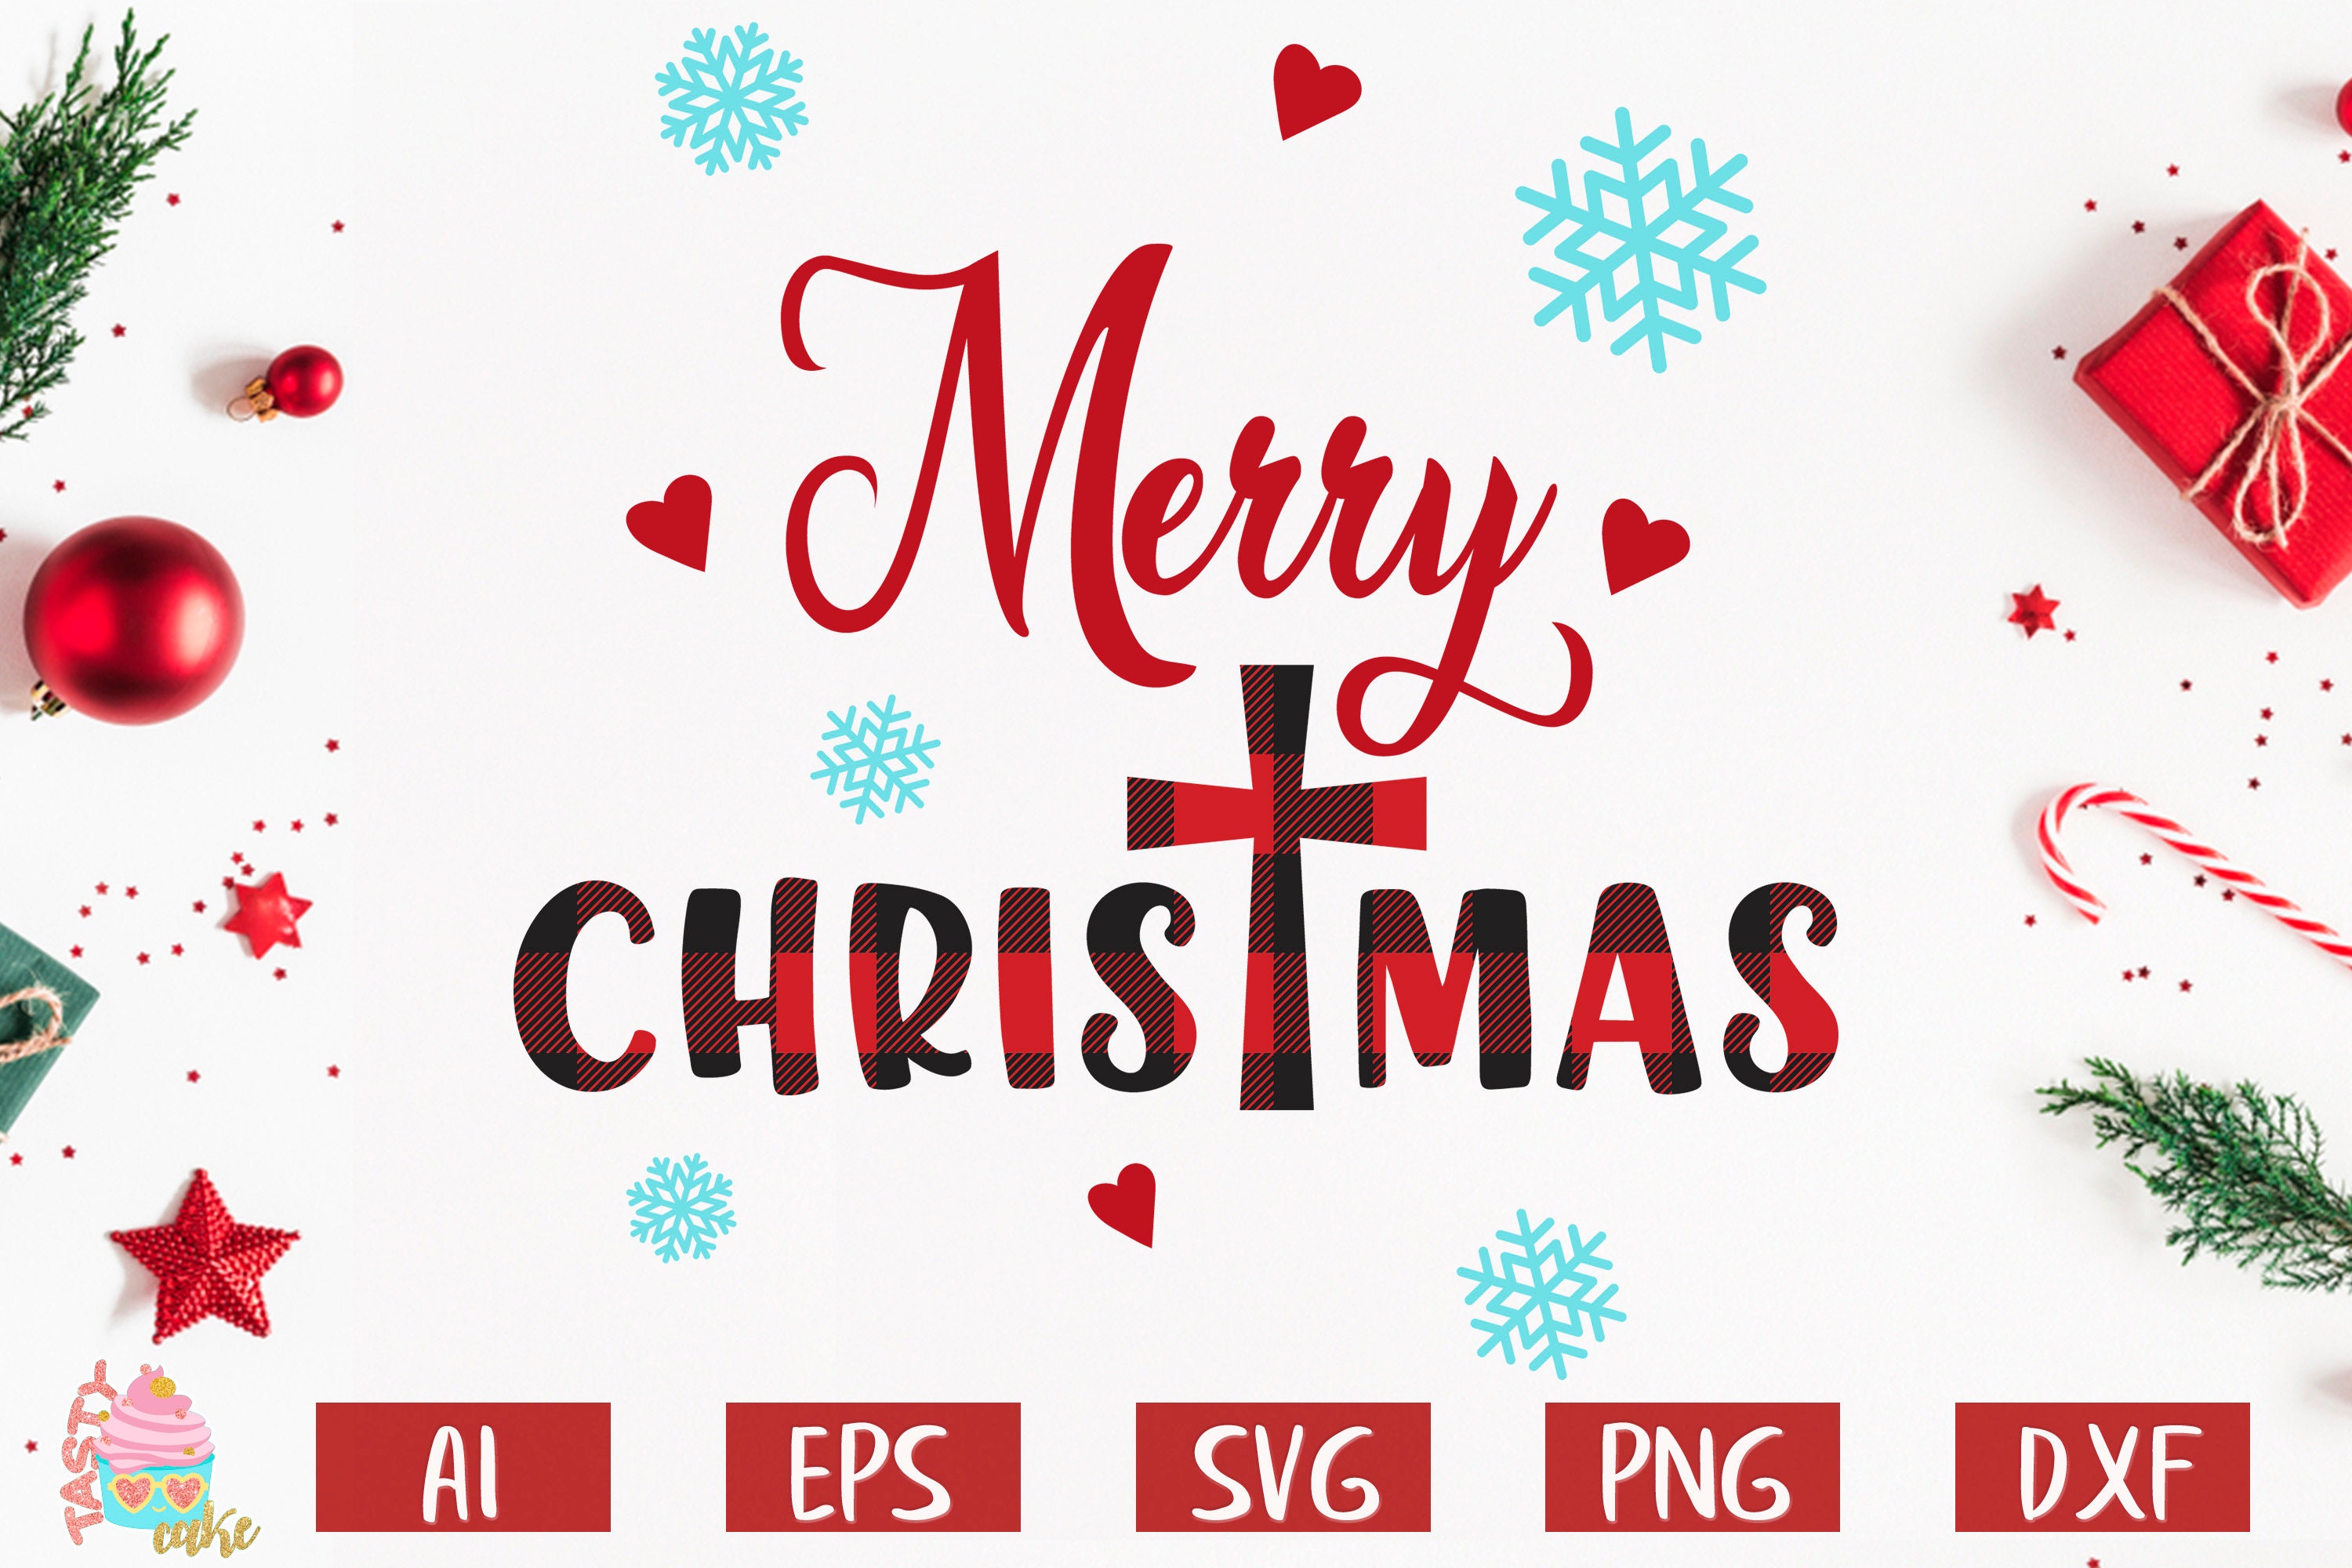 Download Merry Christmas Svg Christmas Cross Svg Christmas Cut Files Etsy